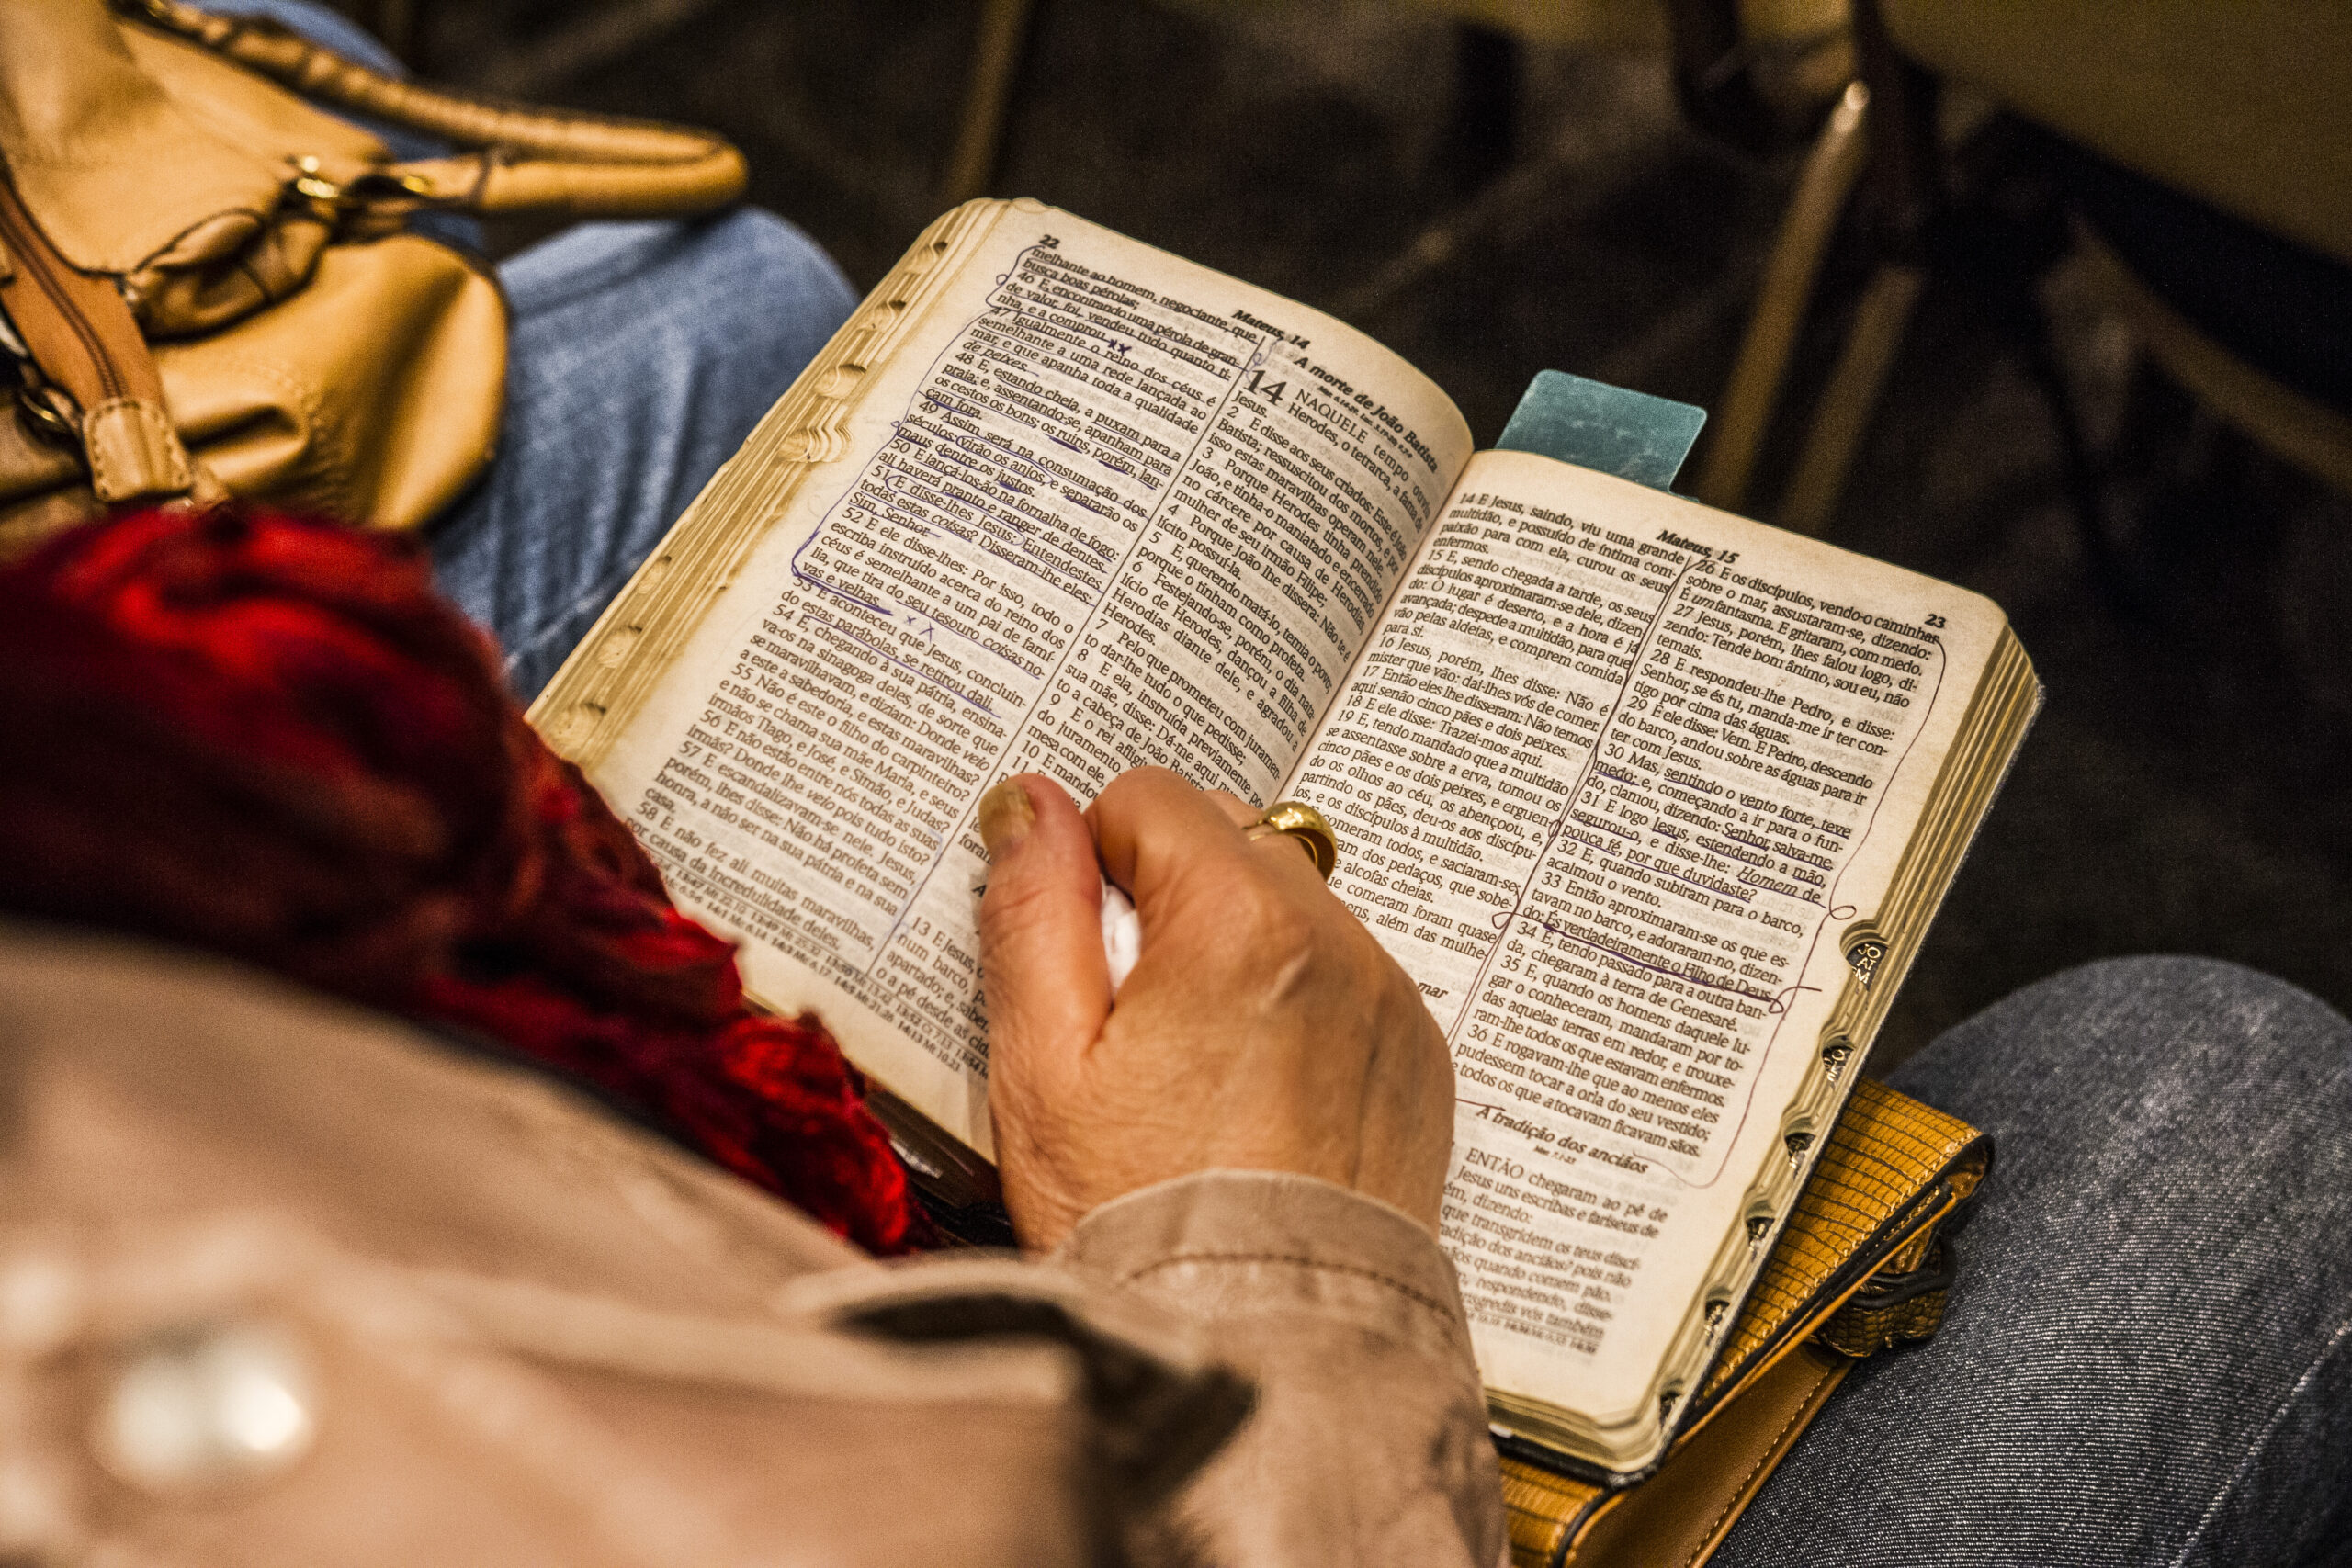 Seeking Divine Guidance: Lessons From Luke 11:9-10